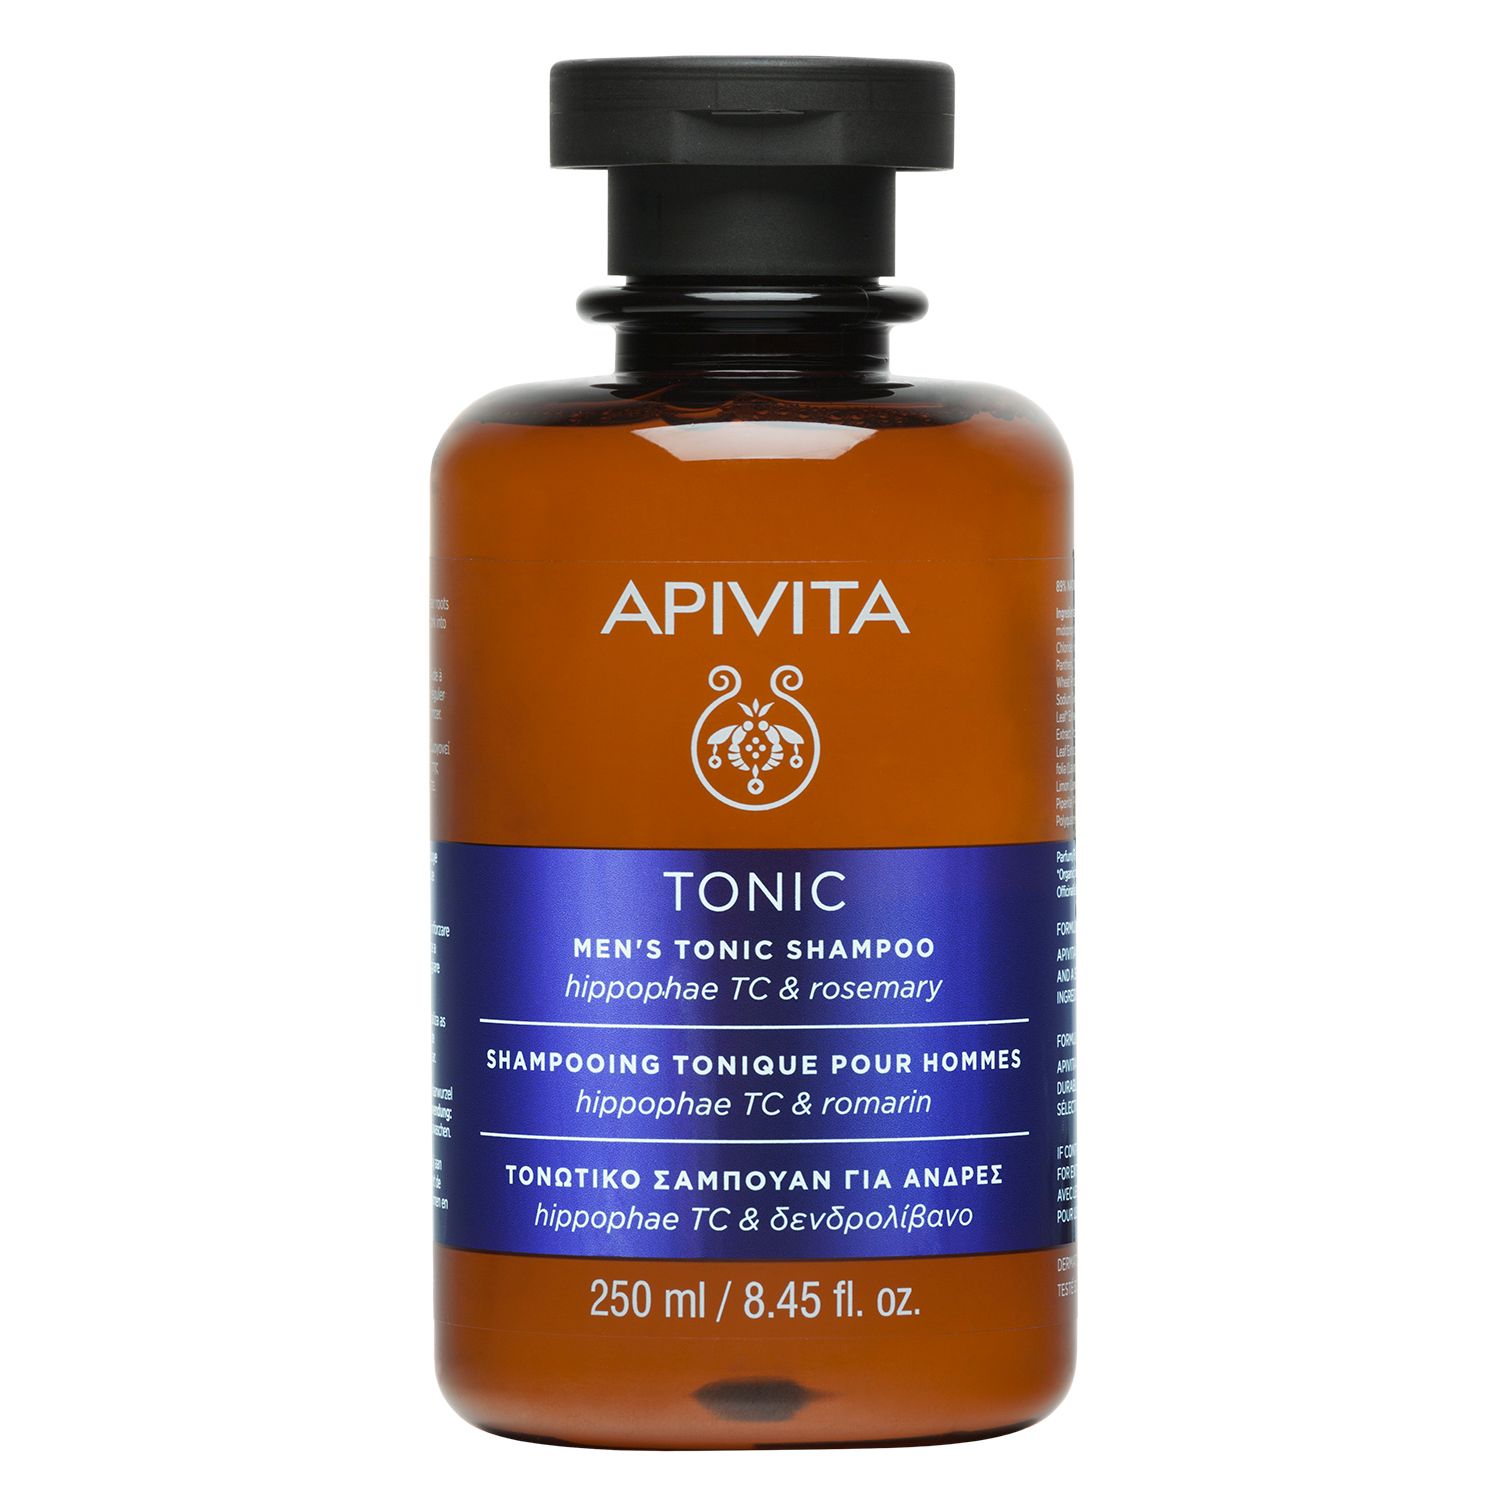 Image of APIVITA TONIC Shampoo Tonificante Uomo